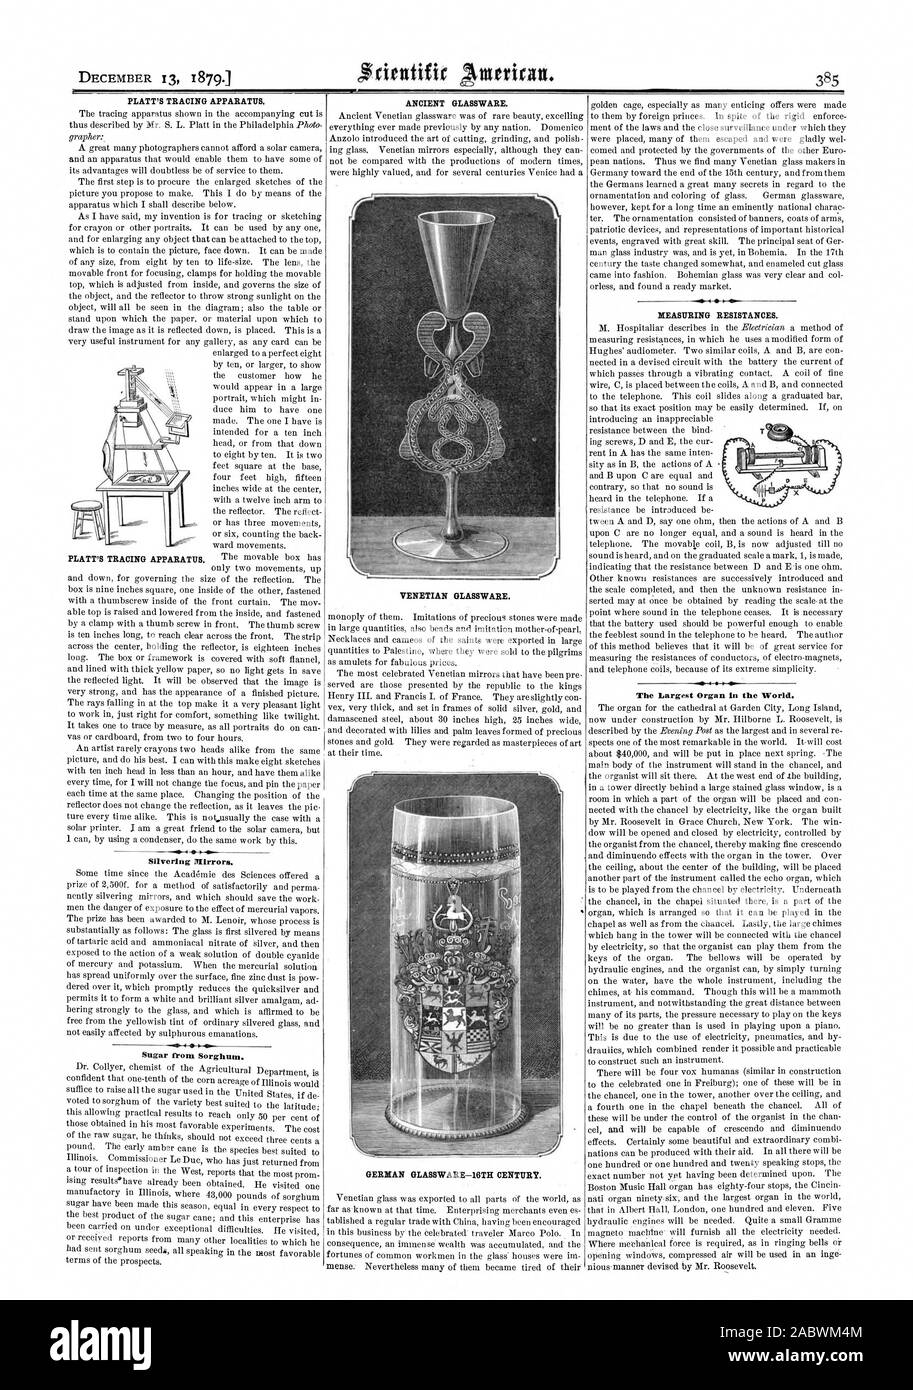 PLATT'S TRACING APPARATUS. Silvering Mirrors. Sugar from Sorghum. ANCIENT GLASSWARE. VENETIAN GLASSWARE. GERMAN GLASSWARE-16TH CENTURY. MEASURING RESISTANCES. The Largest Organ in the World. PLATT'S TRACING APPARATUS., scientific american, 1879-12-13 Stock Photo